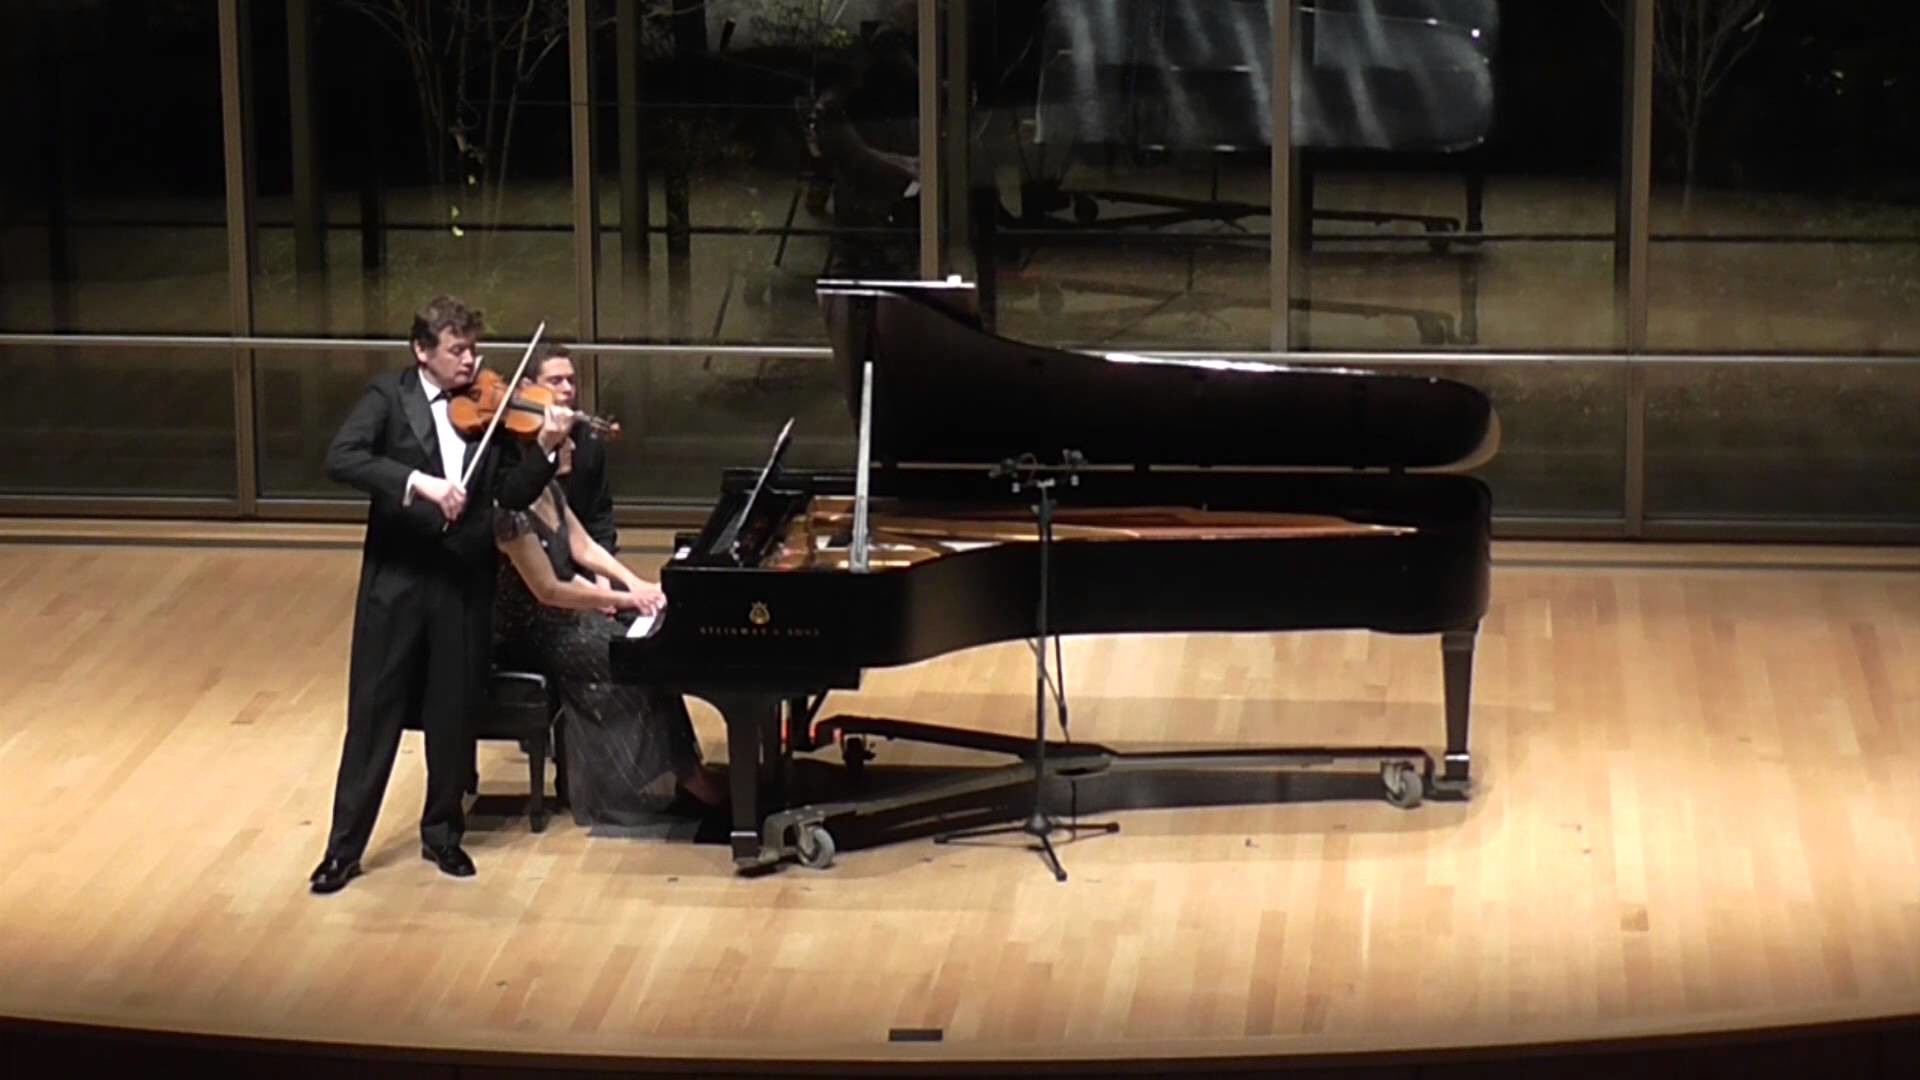 Dvorak Romantic Pieces Op. 75 for Violin and Piano Ivan enat and Sandra Shapiro live at CIM